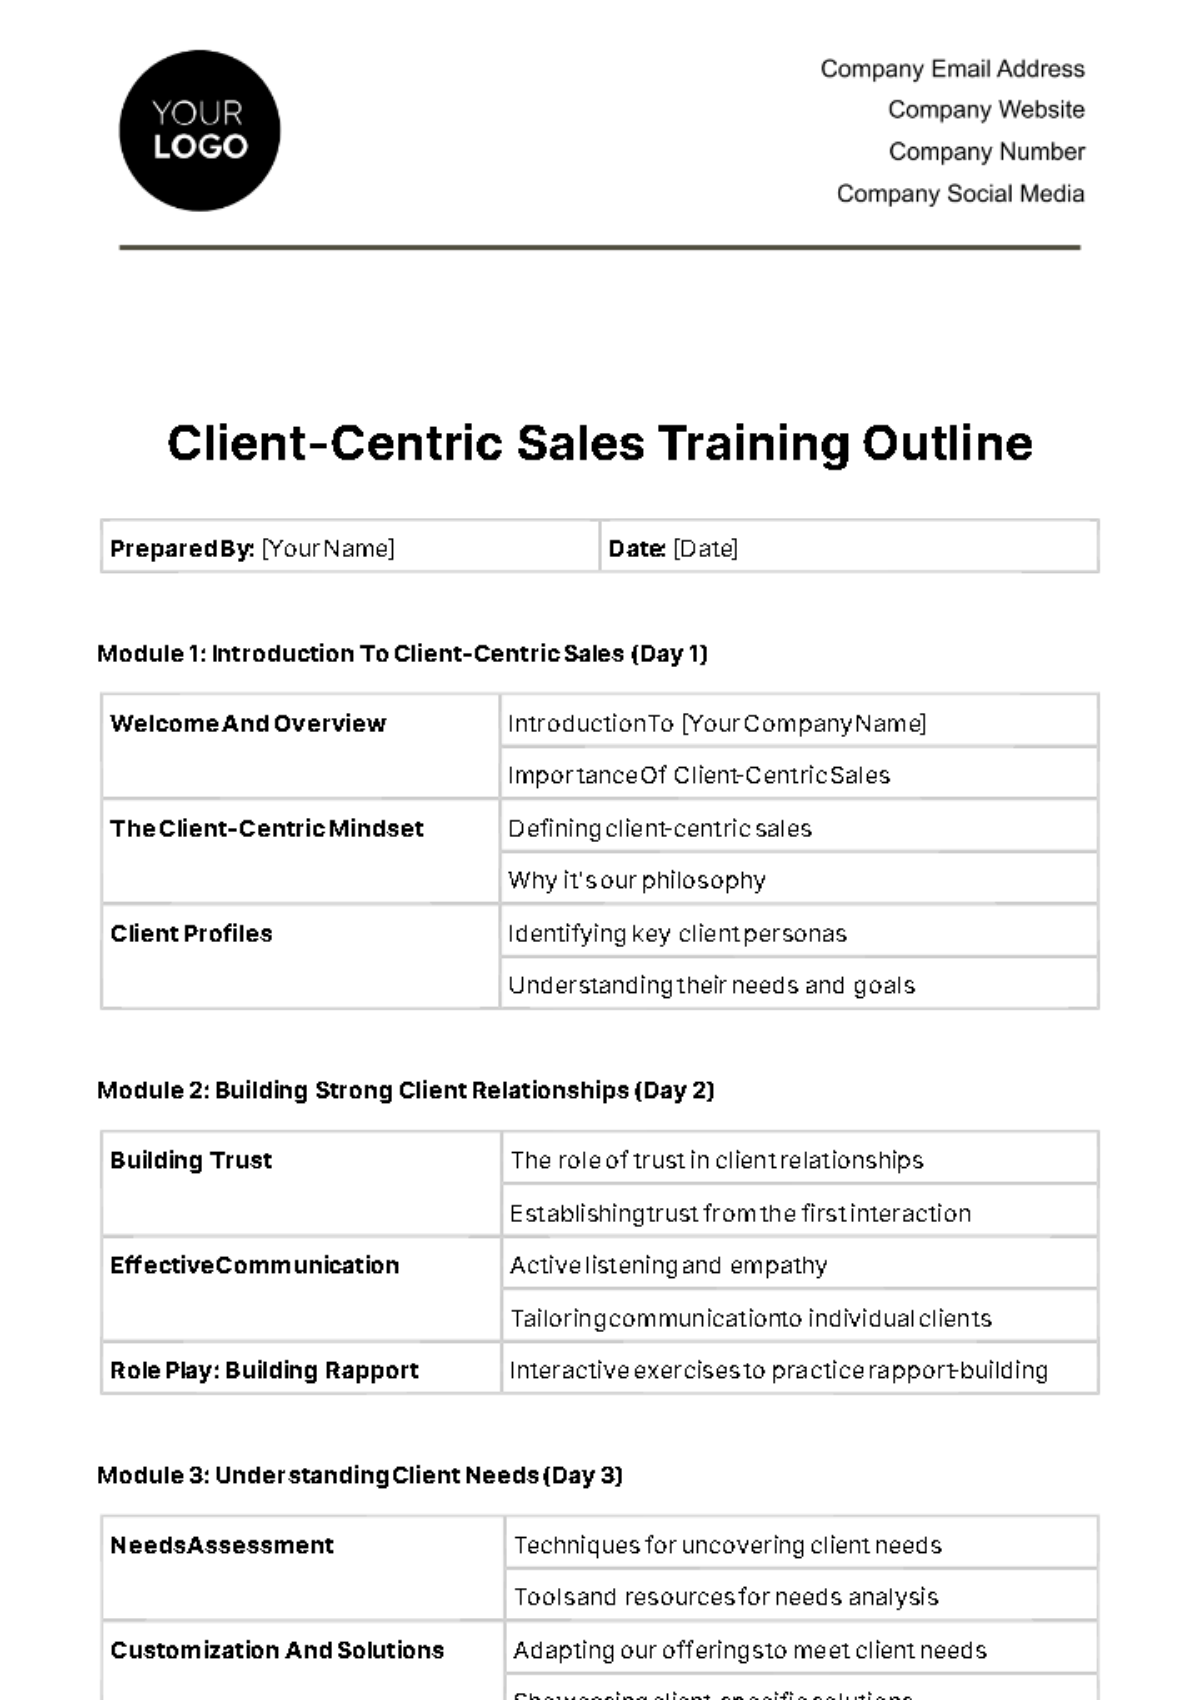 Client-centric Sales Training Outline Template